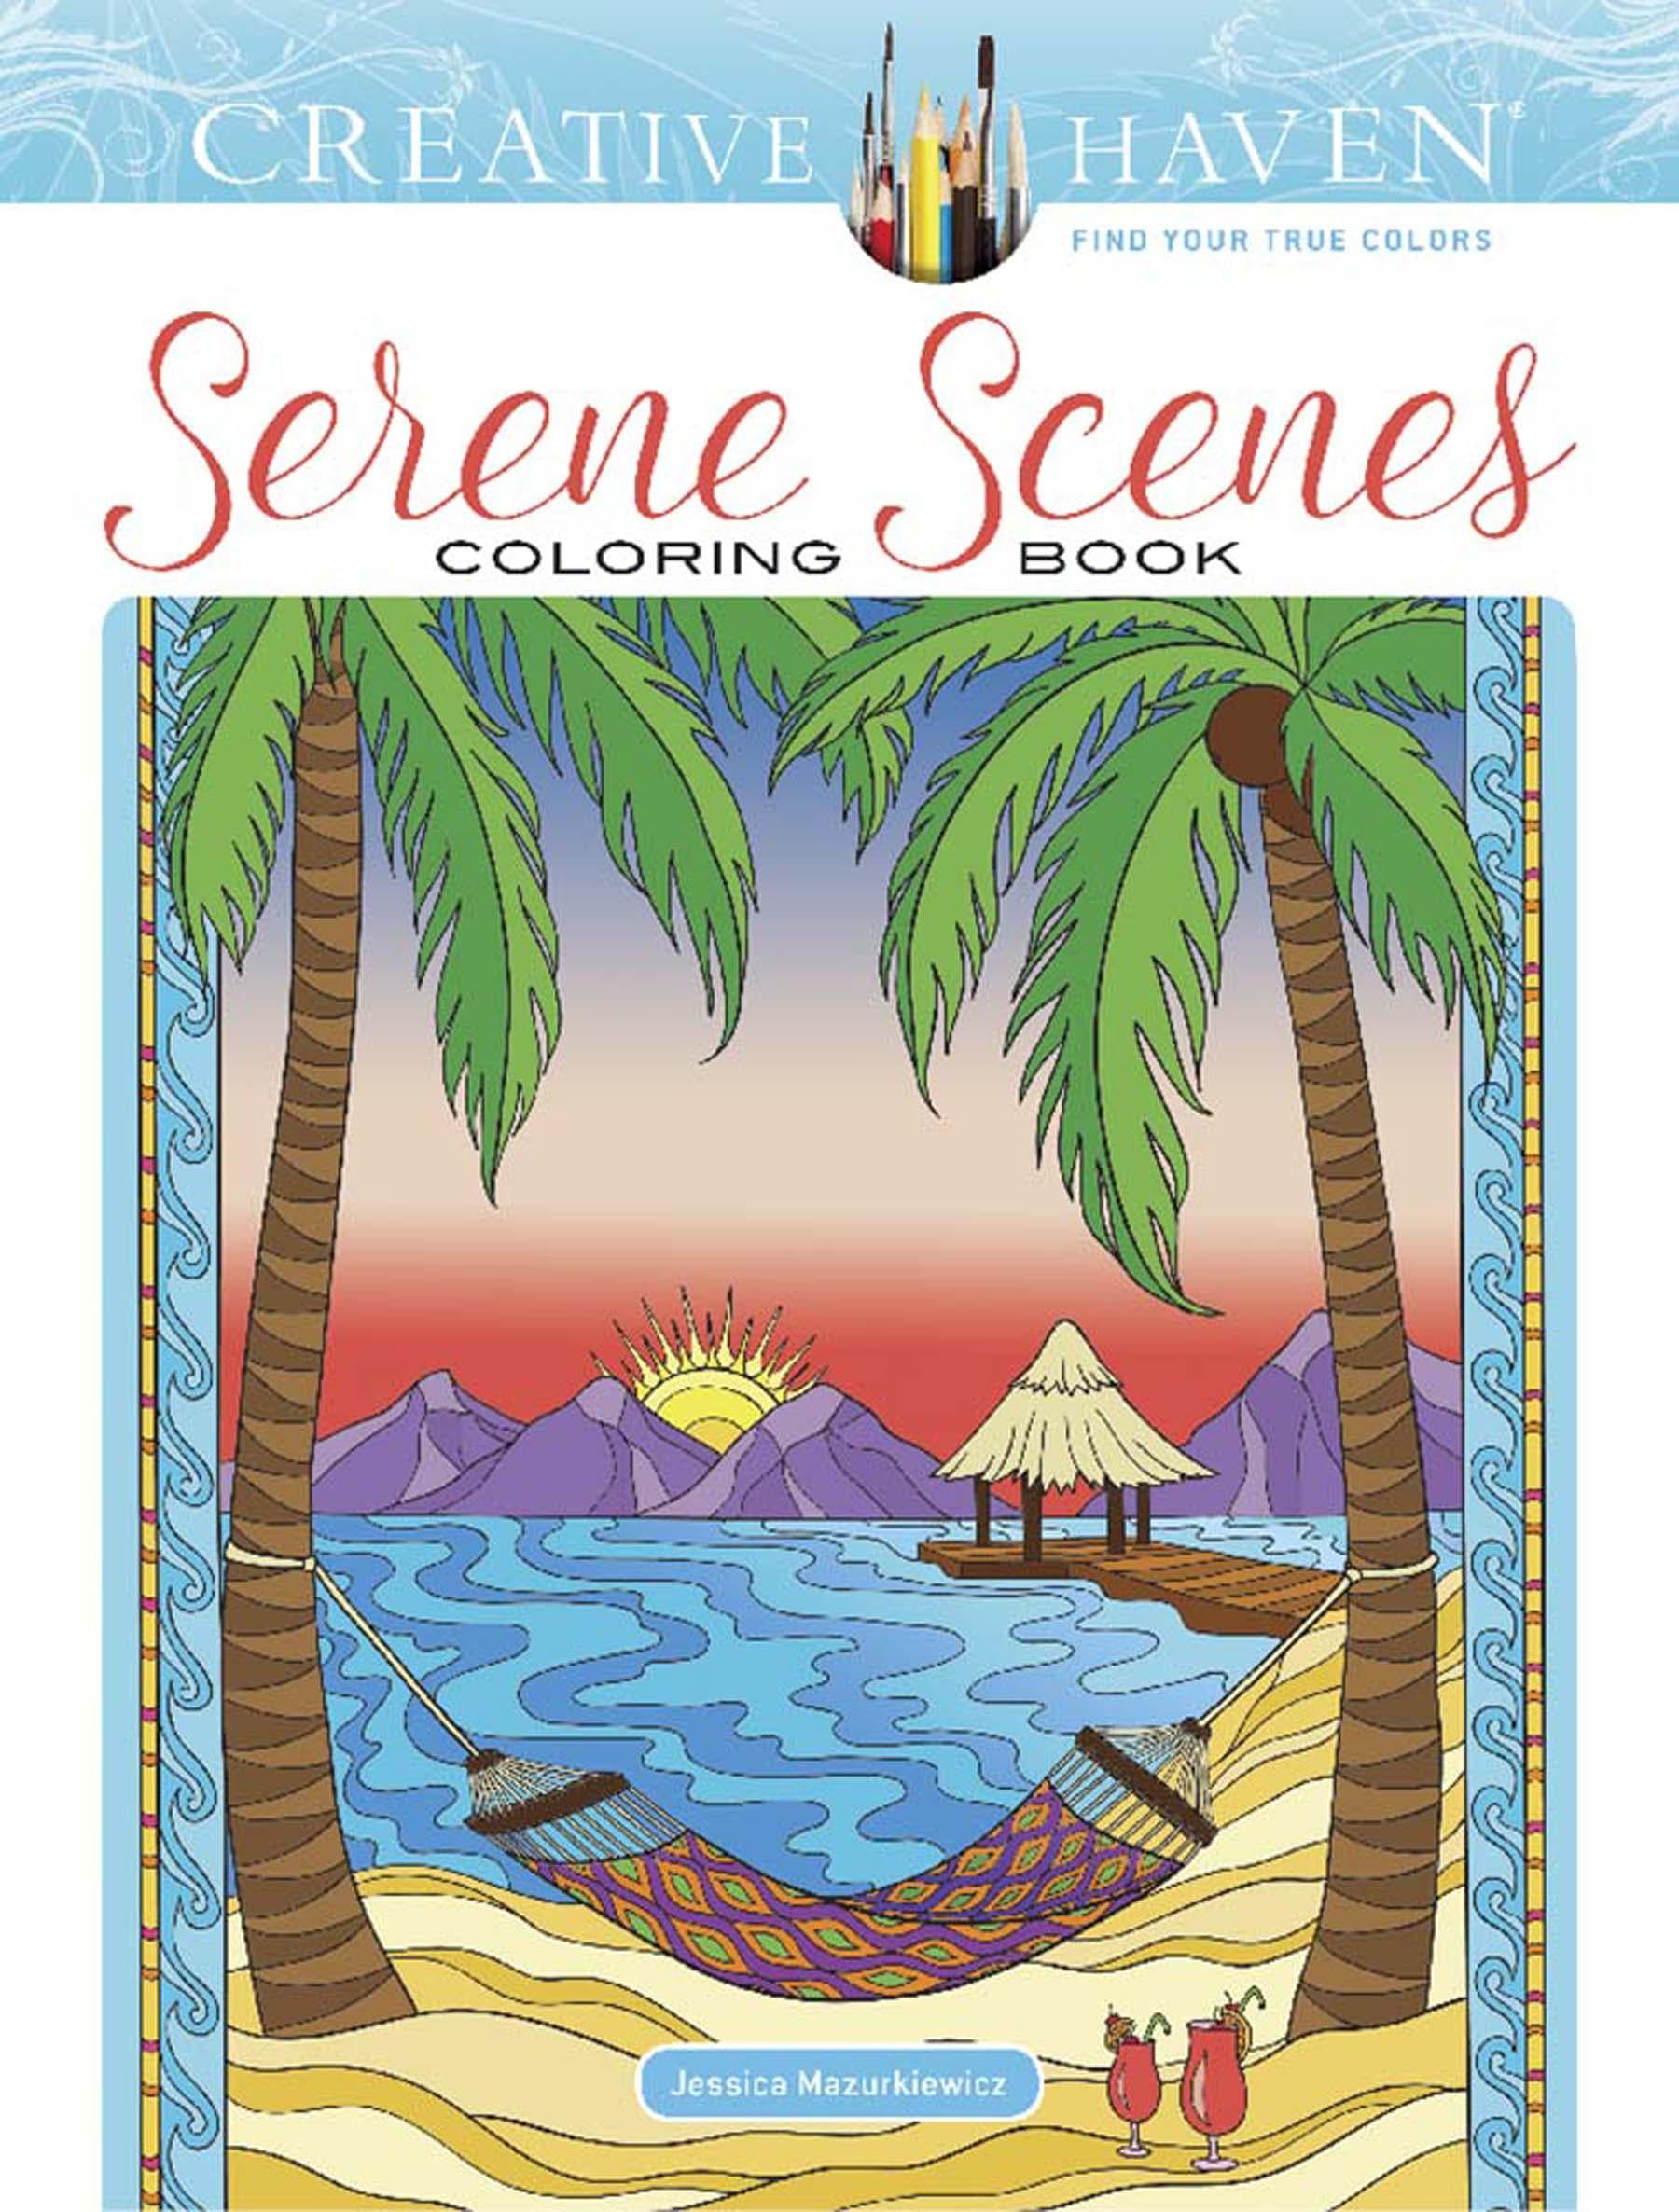 Creative Haven Coloring Books: Creative Haven Serene Scenes Coloring